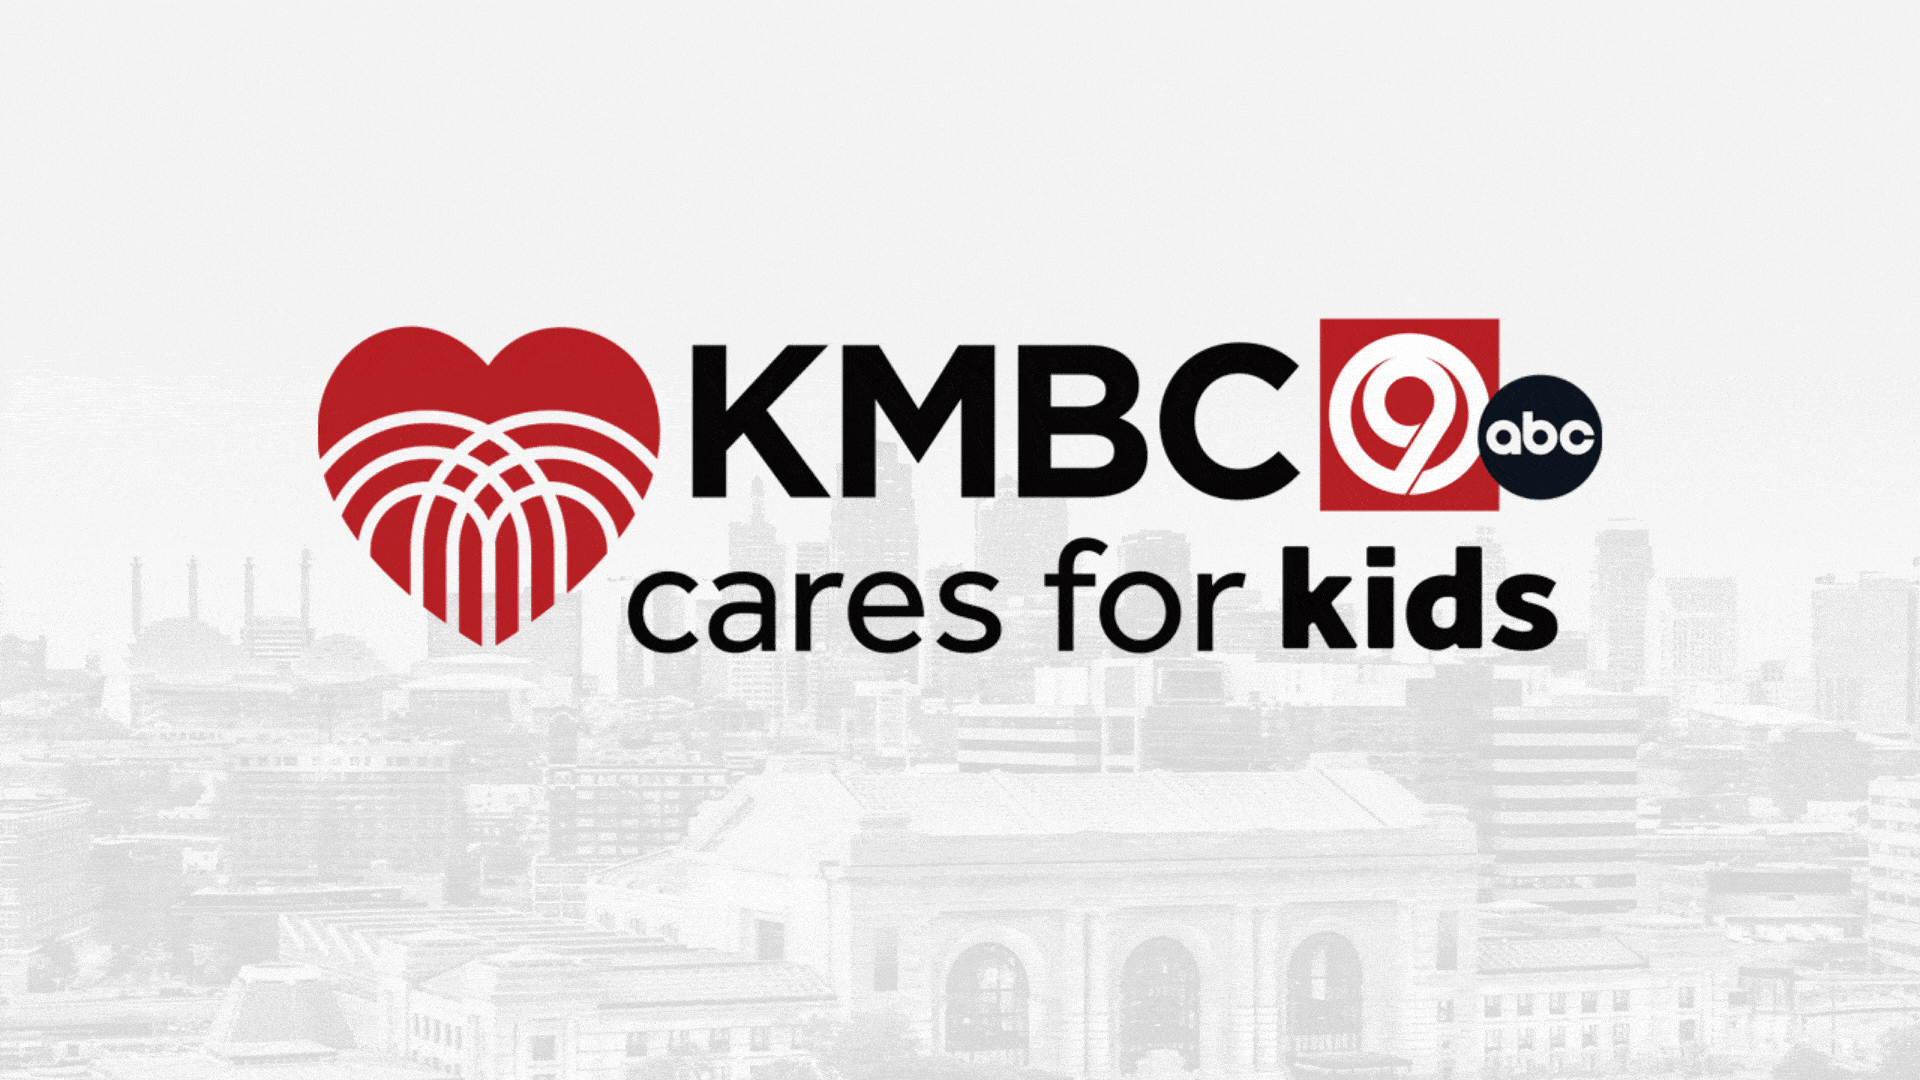 KMBC 9 Cares for Kids